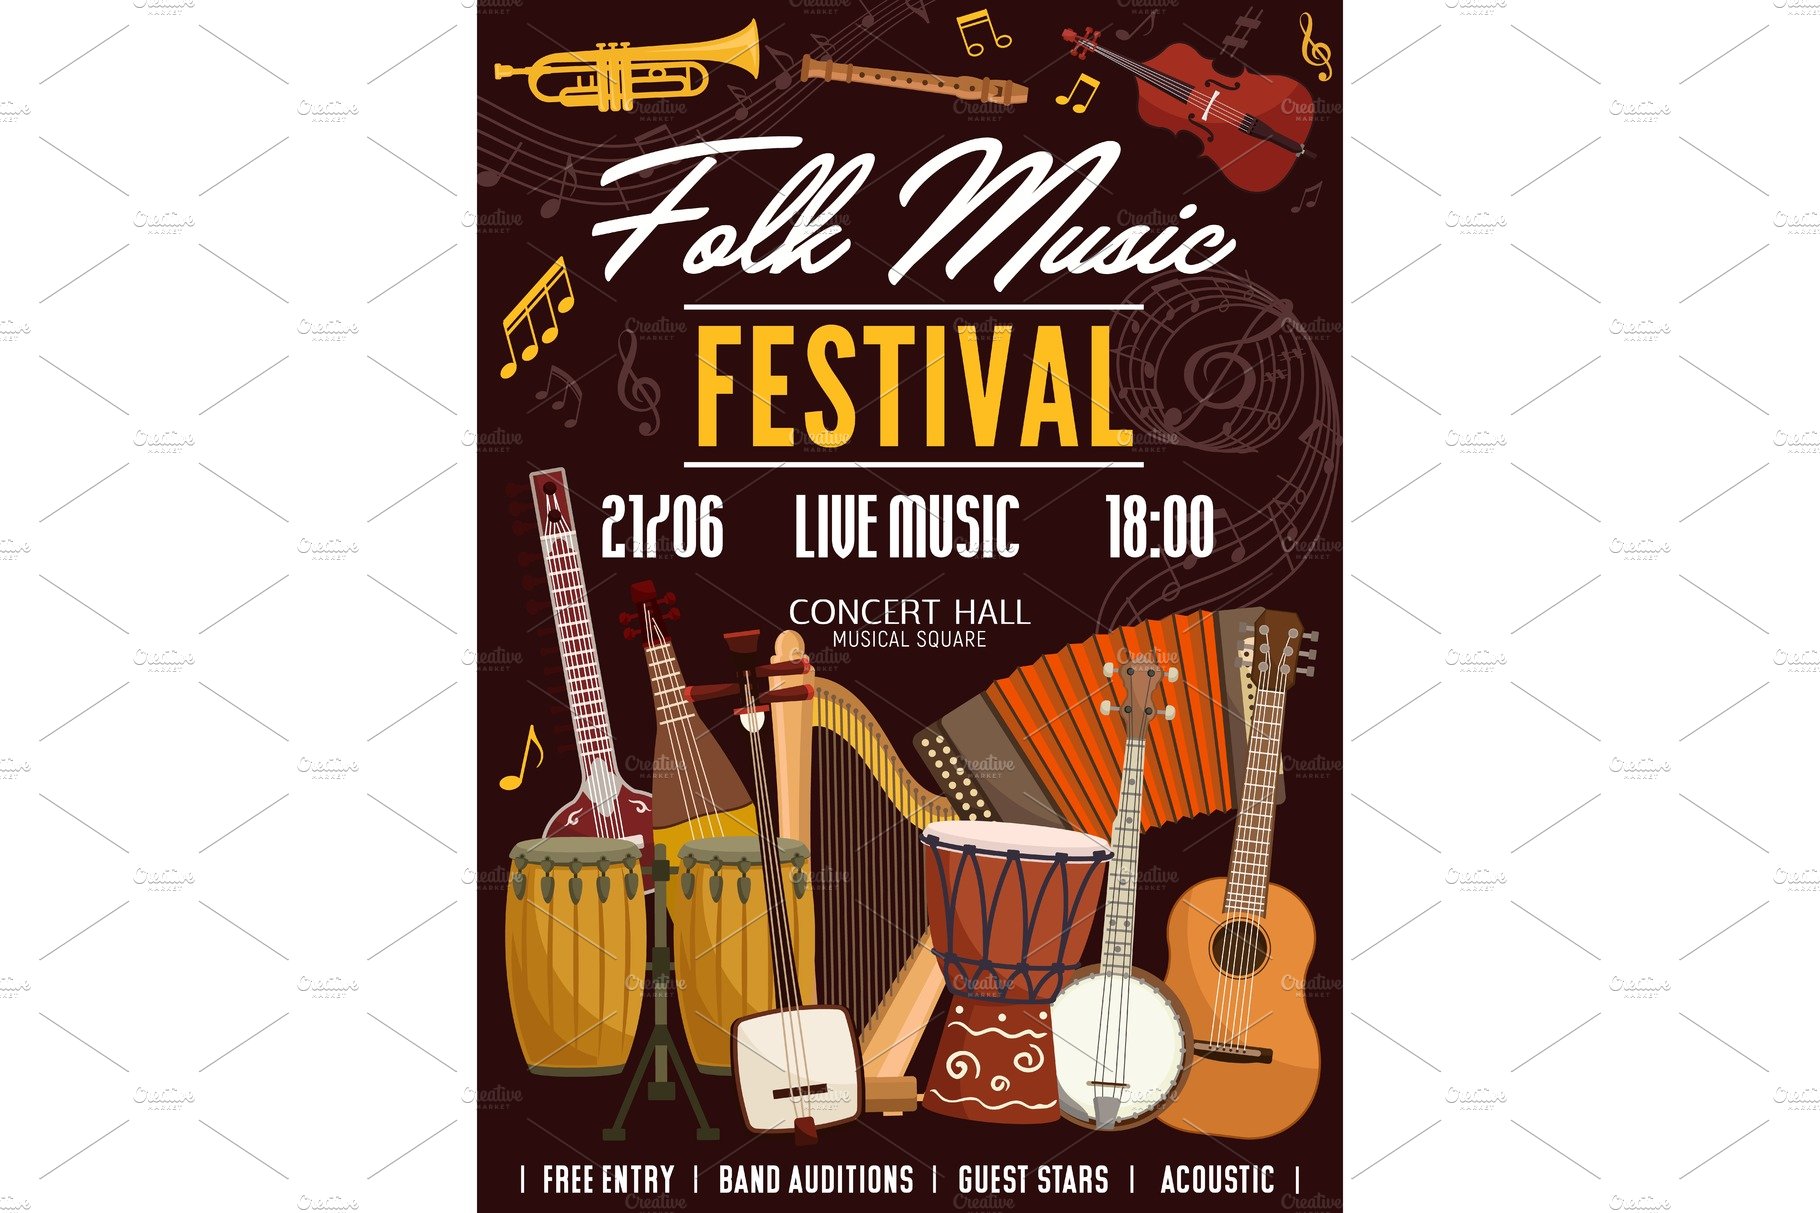 Folk music festival, instruments cover image.